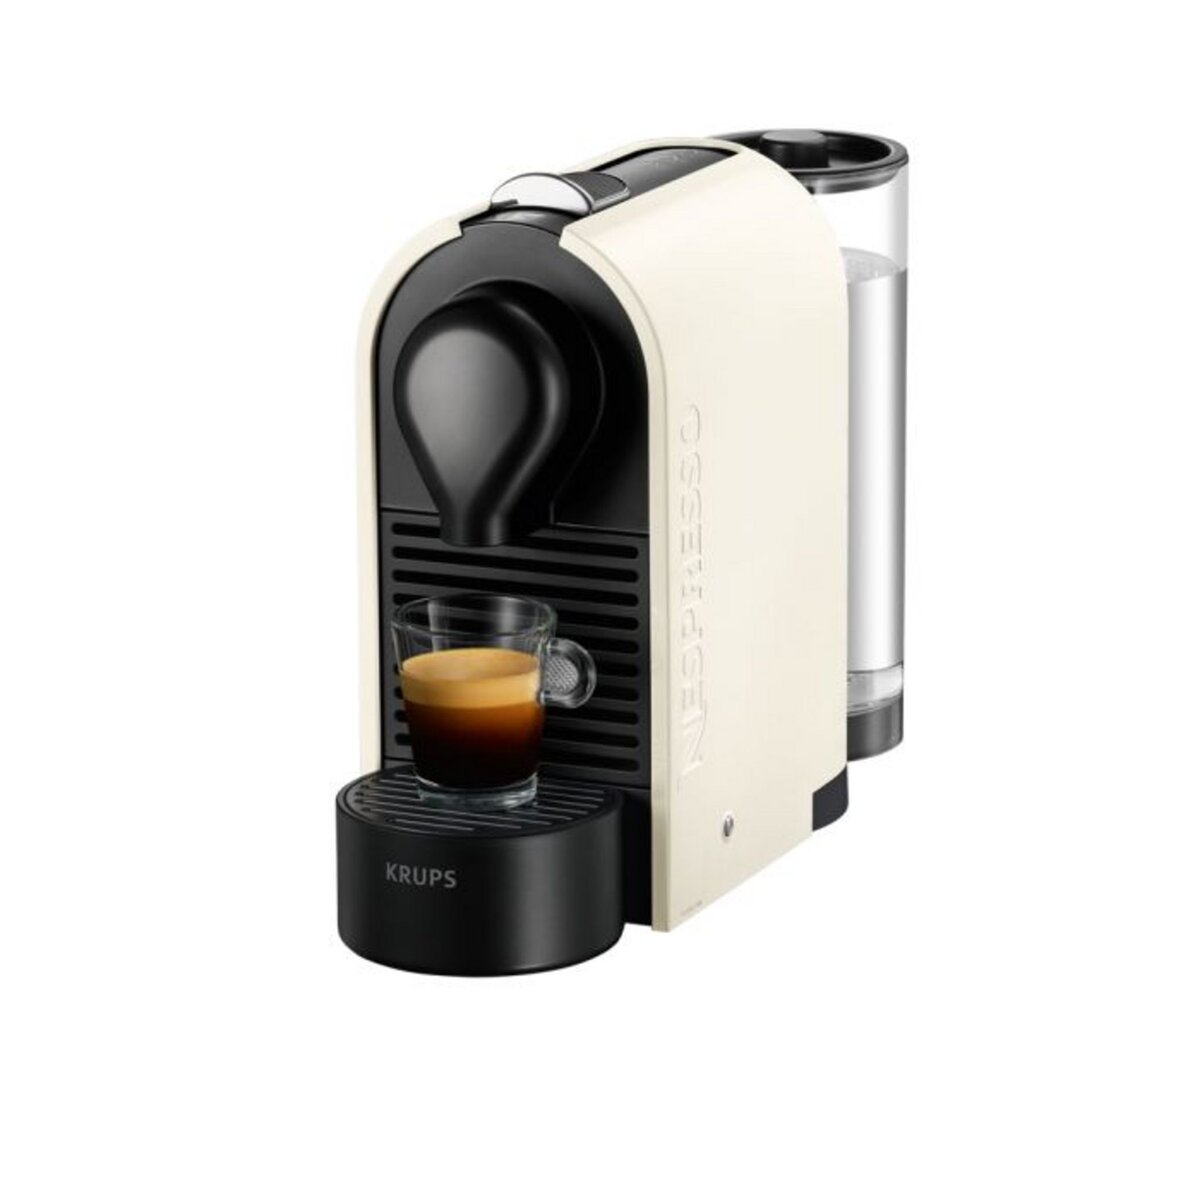 KRUPS Cafetiere a dosette Upure XN2501 K blanche Nespresso